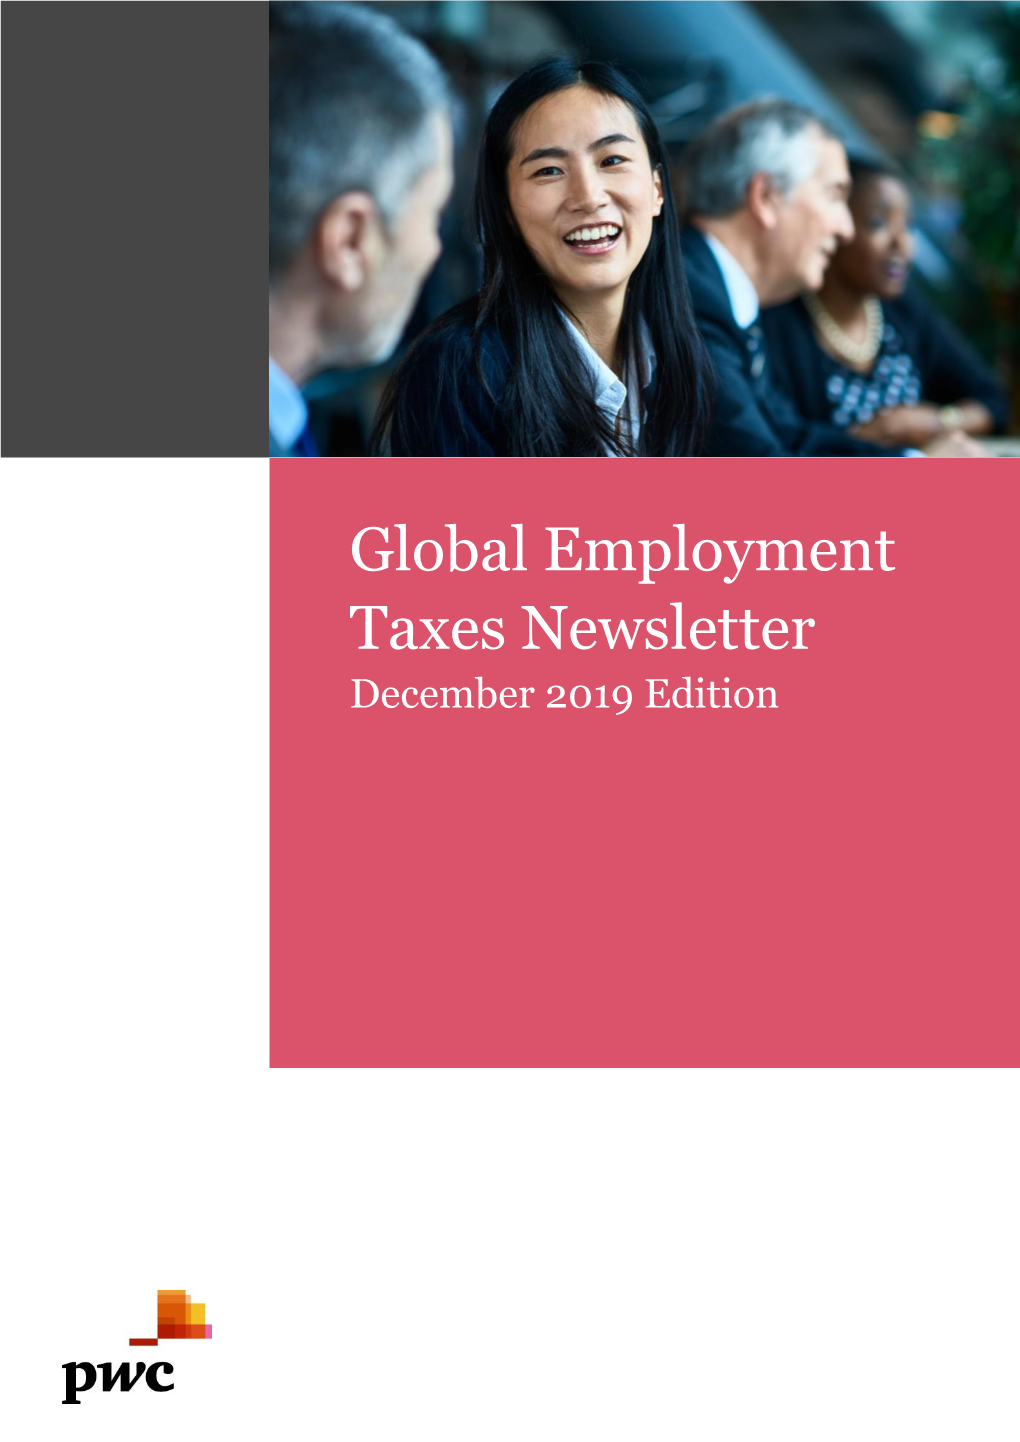 Global Employment Taxes Newsletter: December 2019 Edition